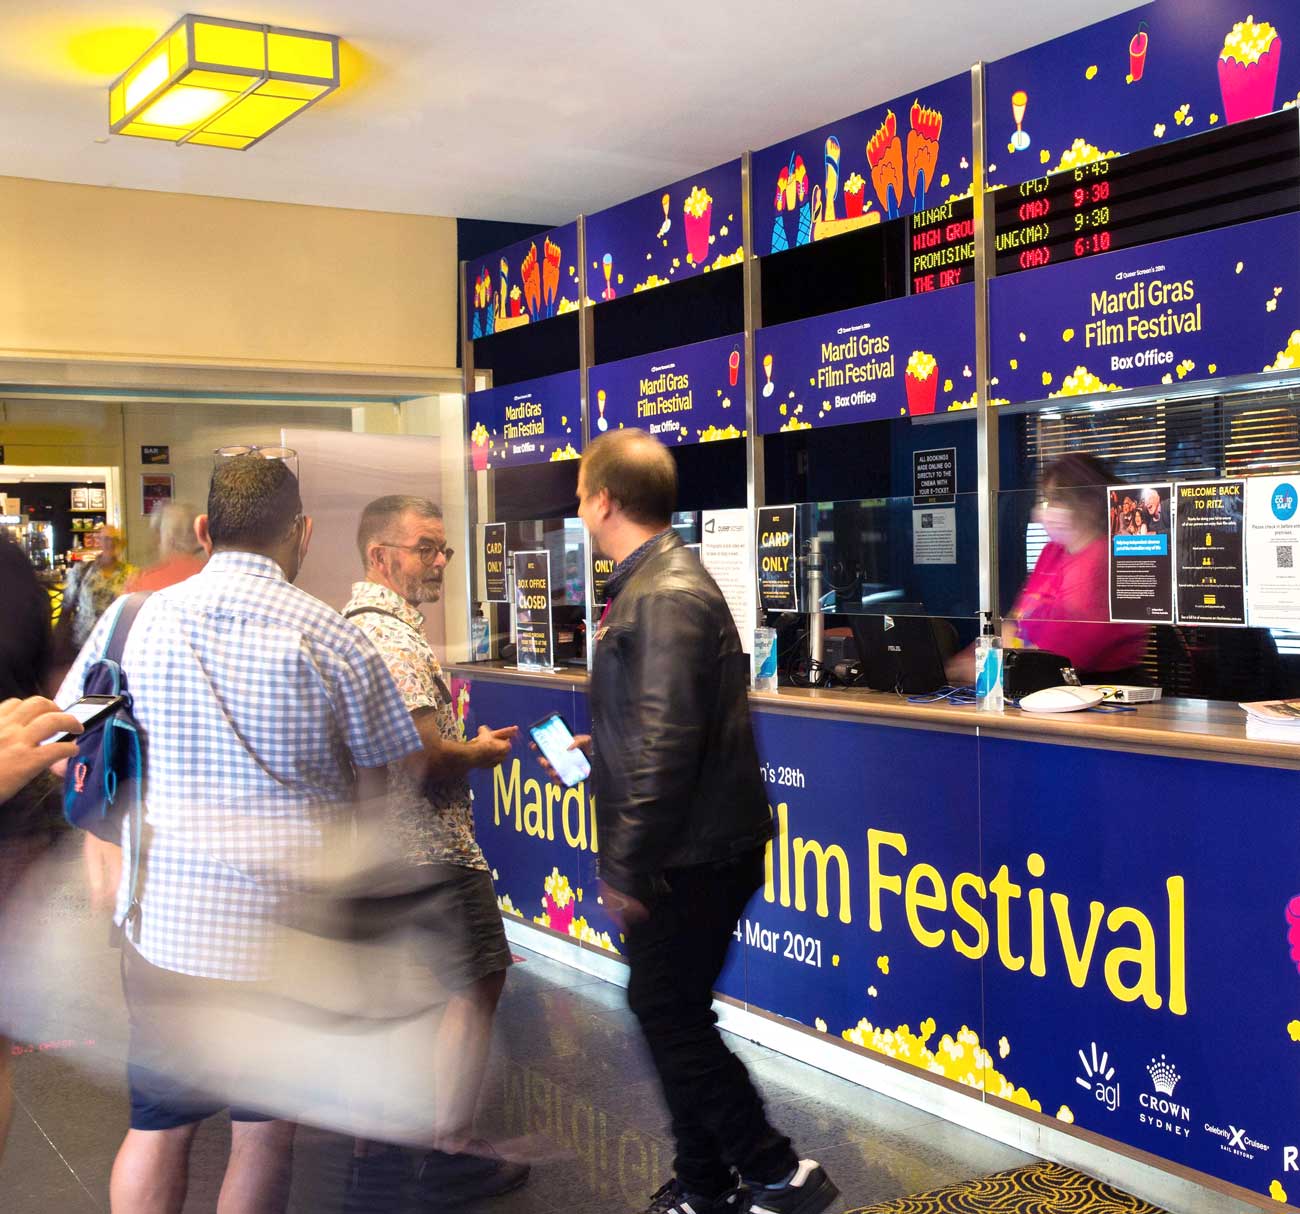 Mardi Gras Film Festival 2021 ticket booth at Randwick Ritz